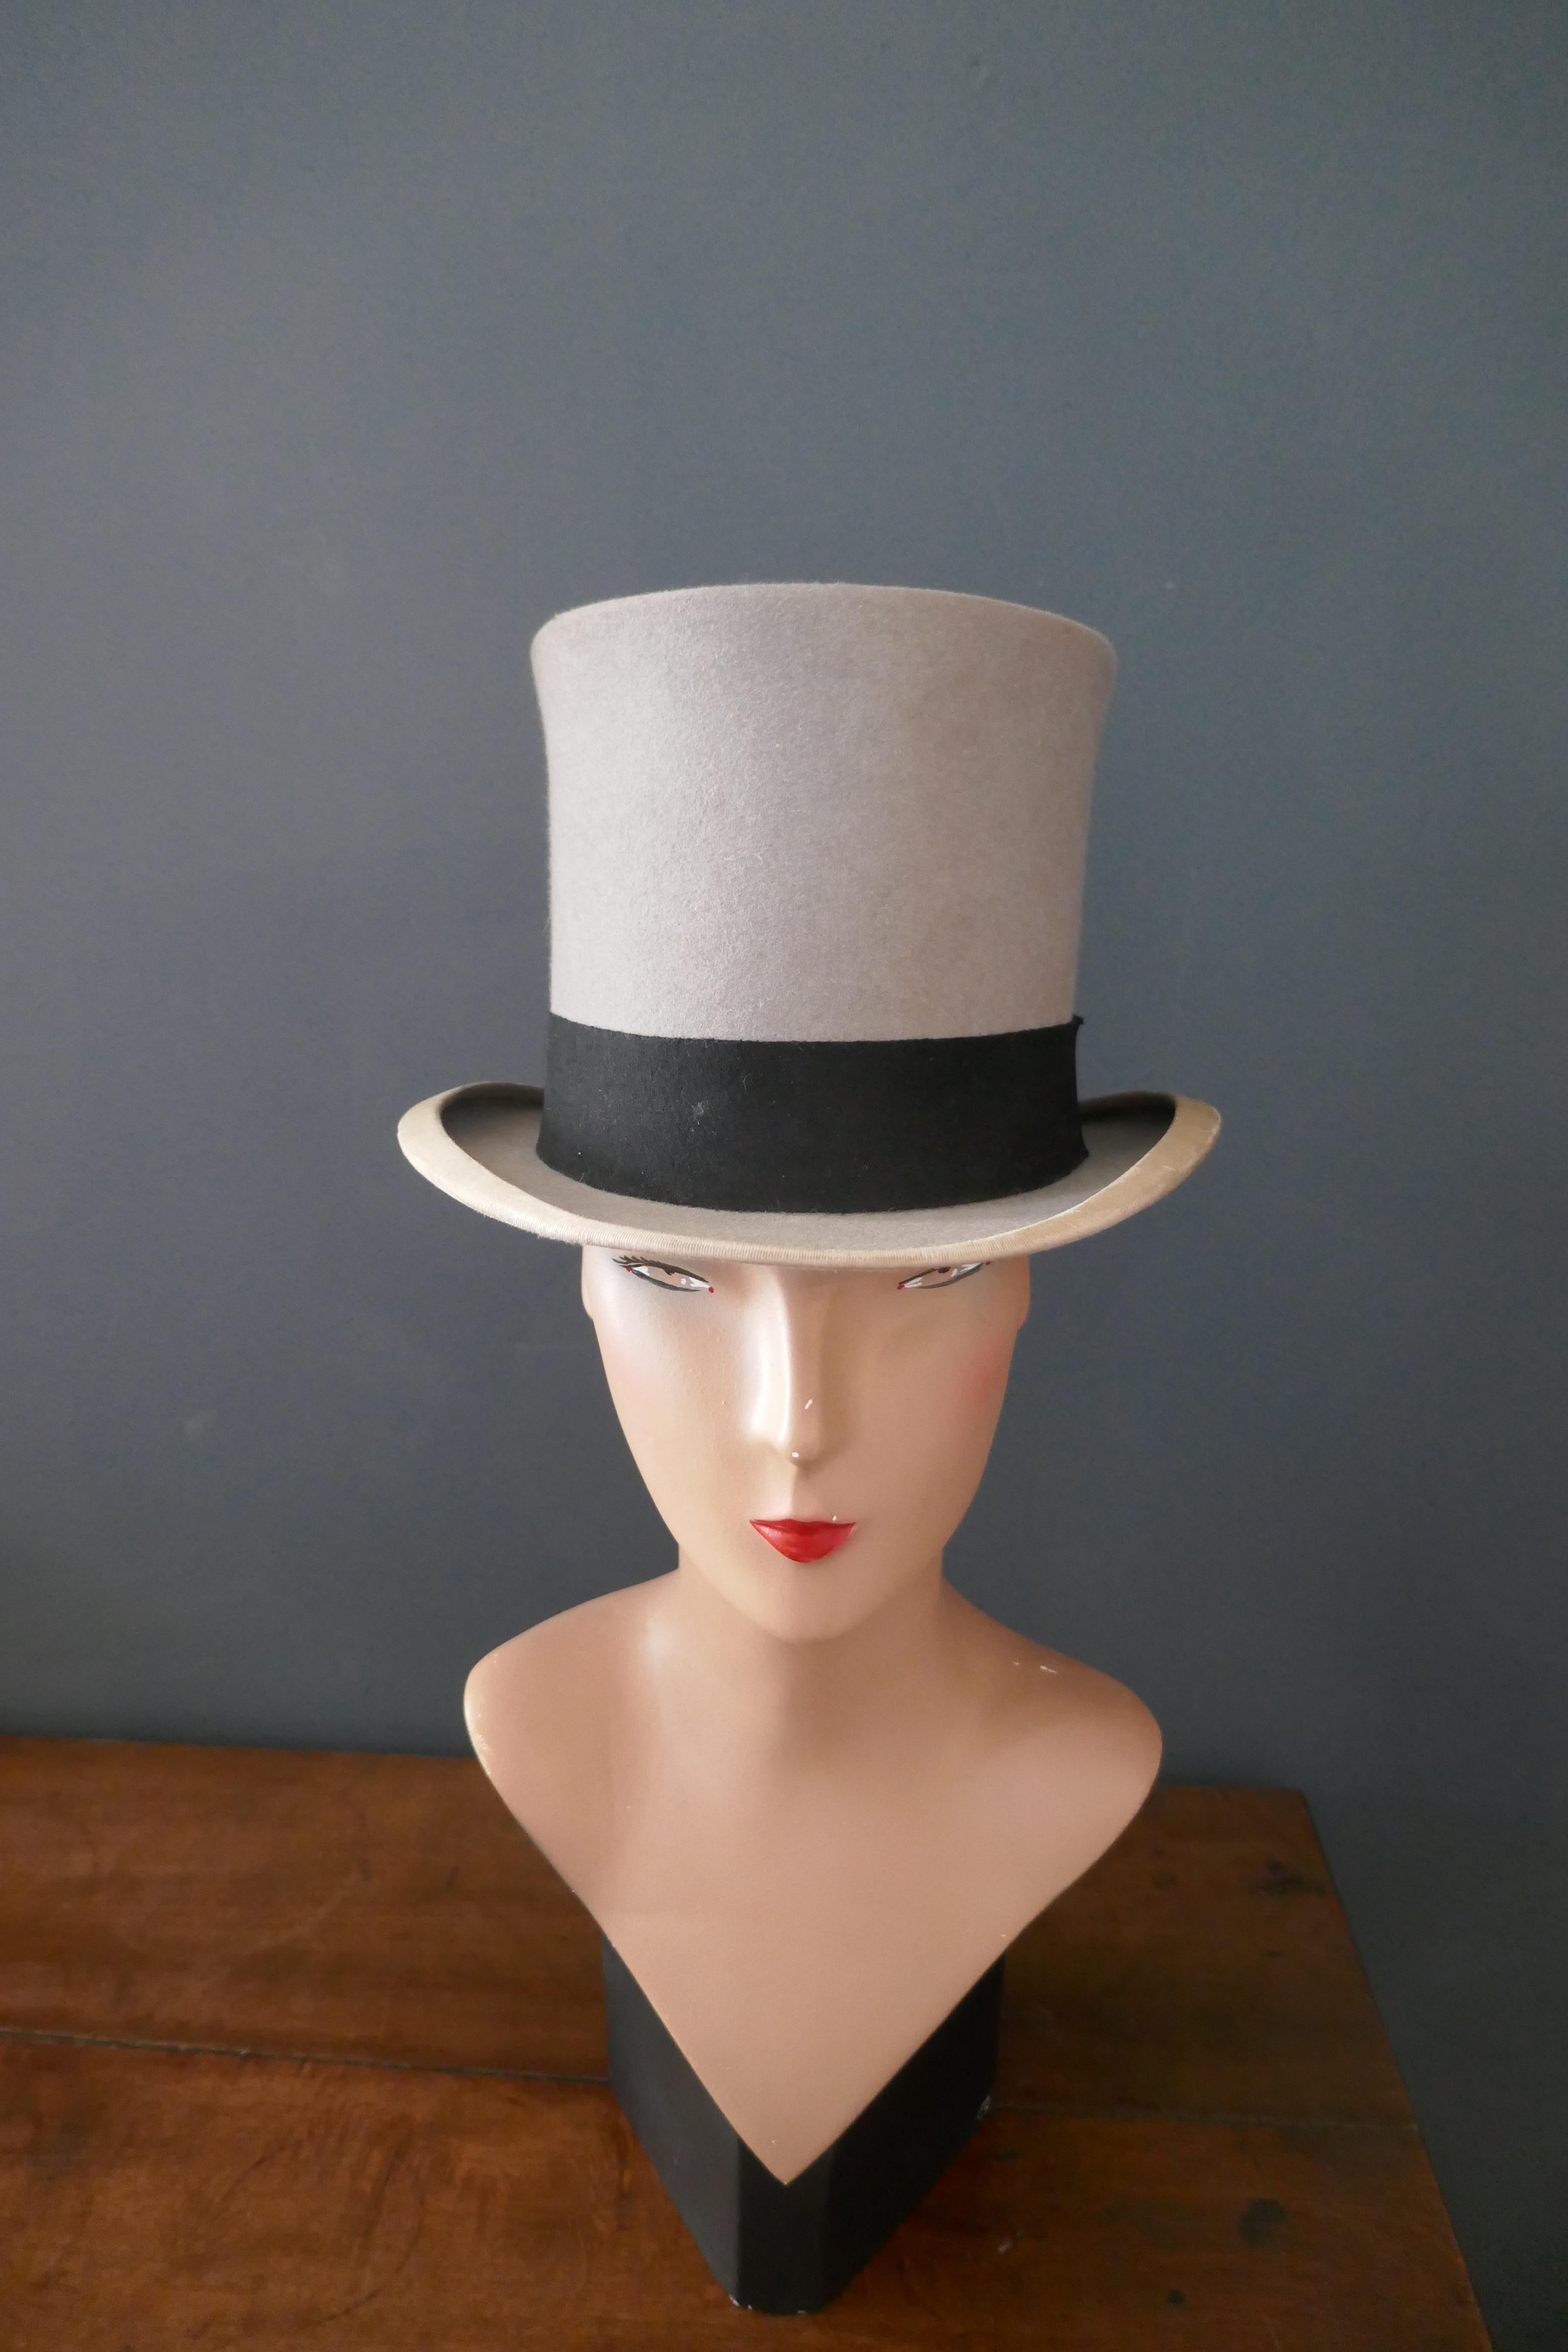 Men's Elegant Vintage Grey Felt Top Hat from Herbert Johnson Bond Street 